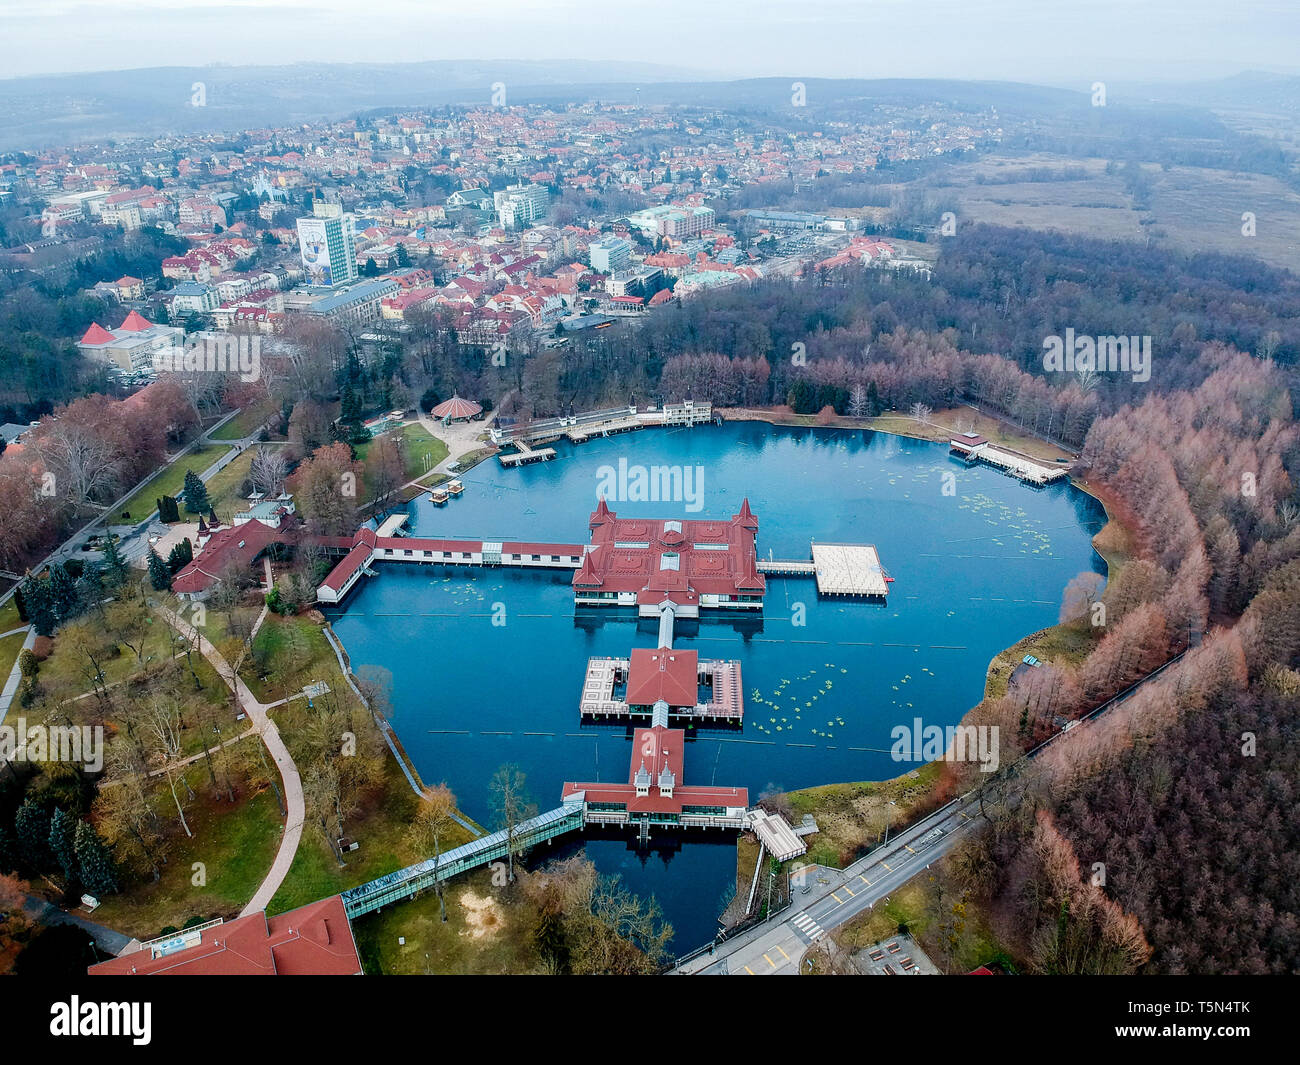 Lake Heviz thermal bath in Hungary Stock Photo - Alamy